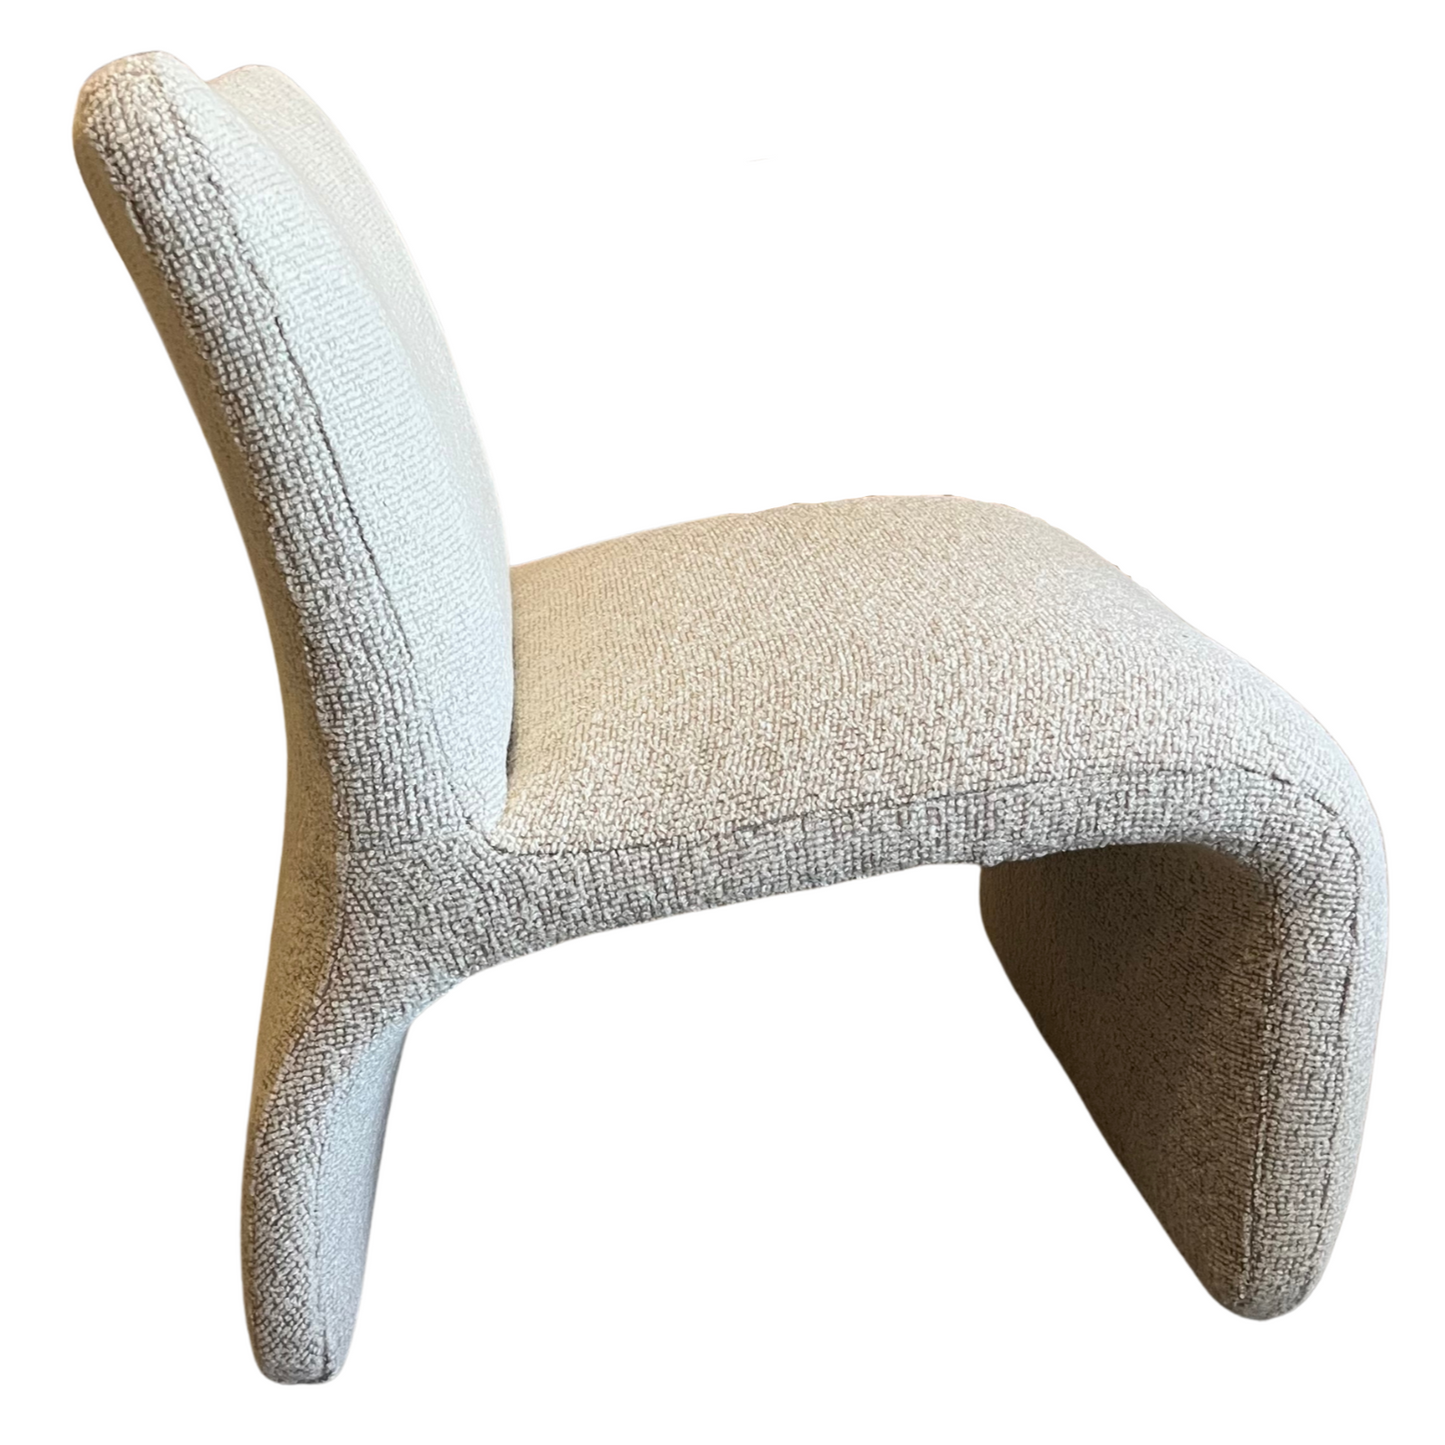 Vladimir Kagan for Preview Sculptural Chairs